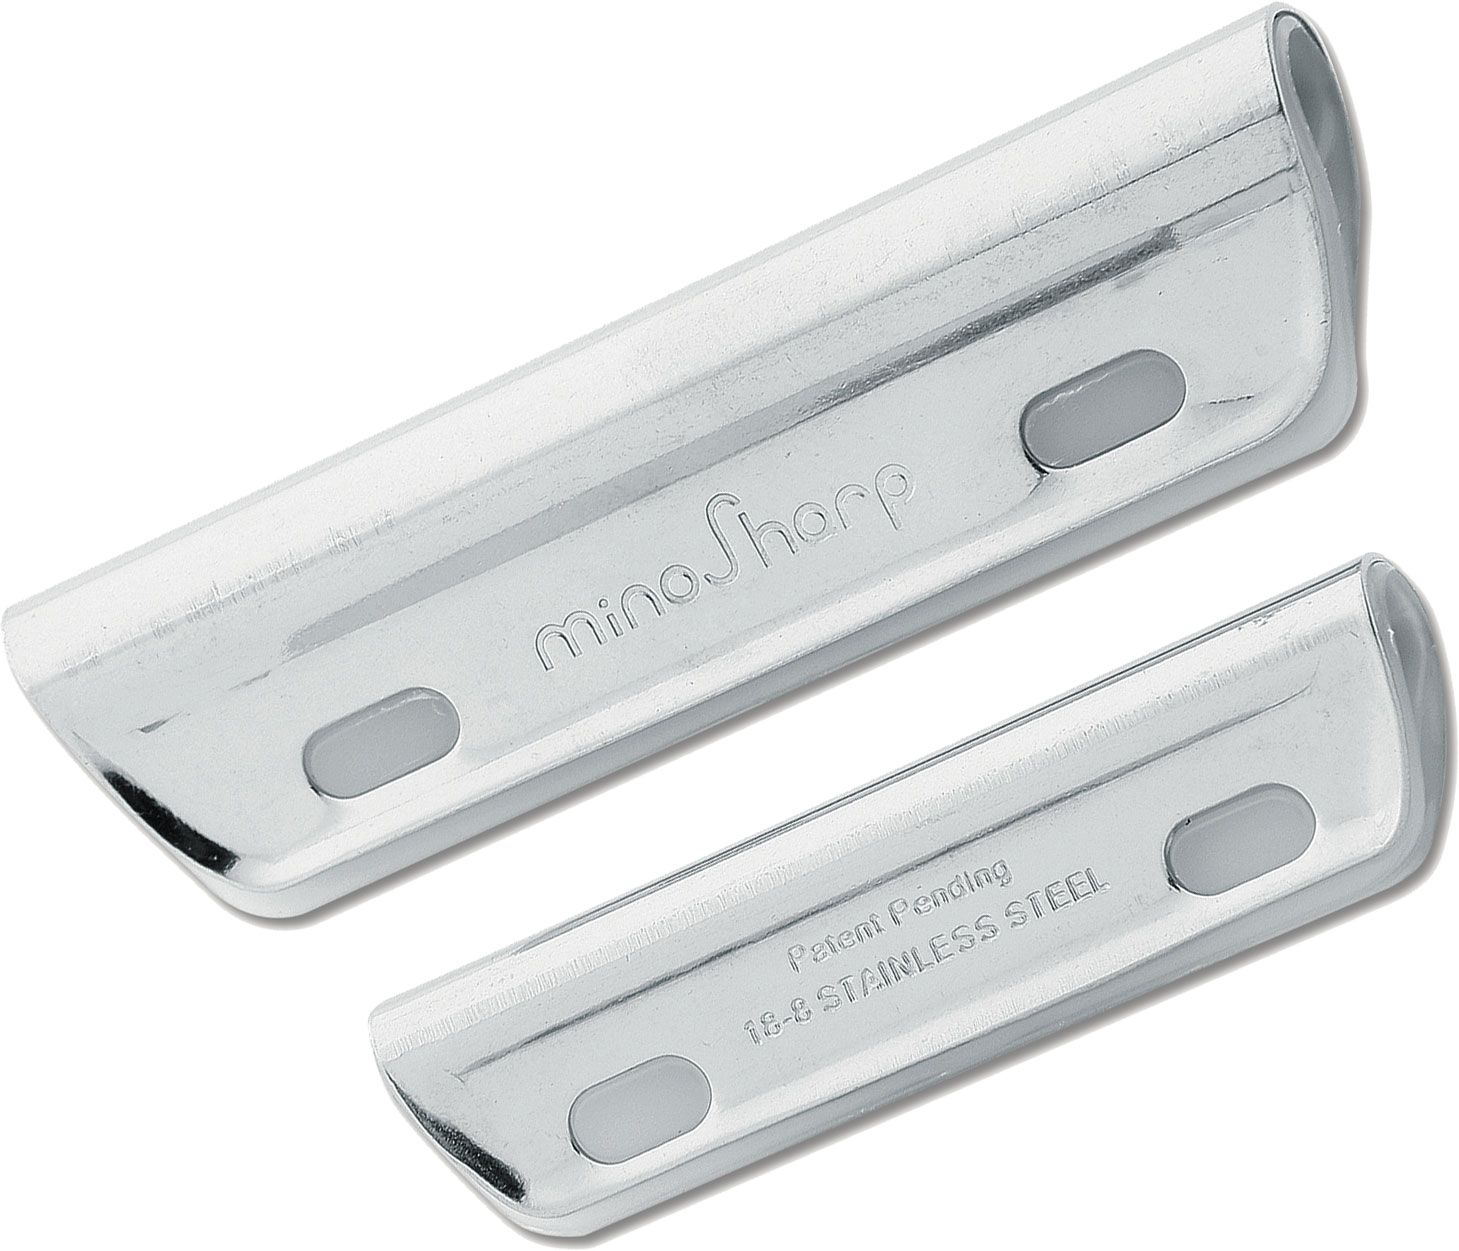 Global 463 MinoSharp Knife Sharpening Guide Rail with Plastic Liners